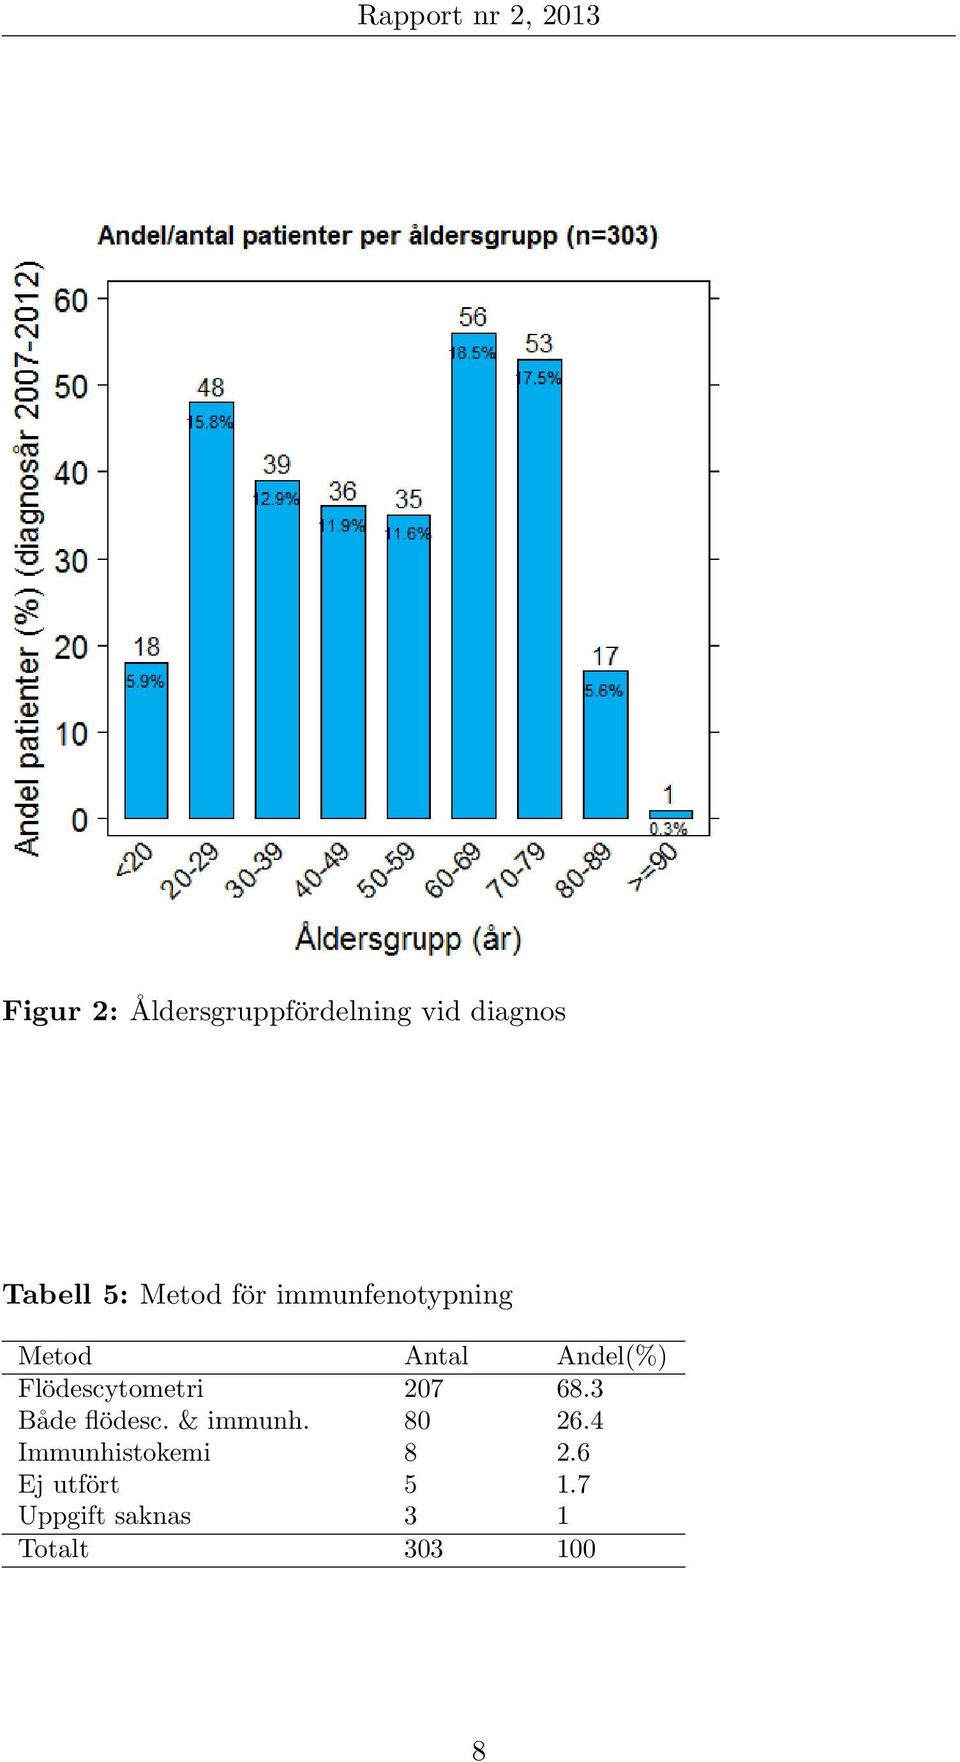 Flödescytometri 207 68.3 Både flödesc. & immunh. 80 26.